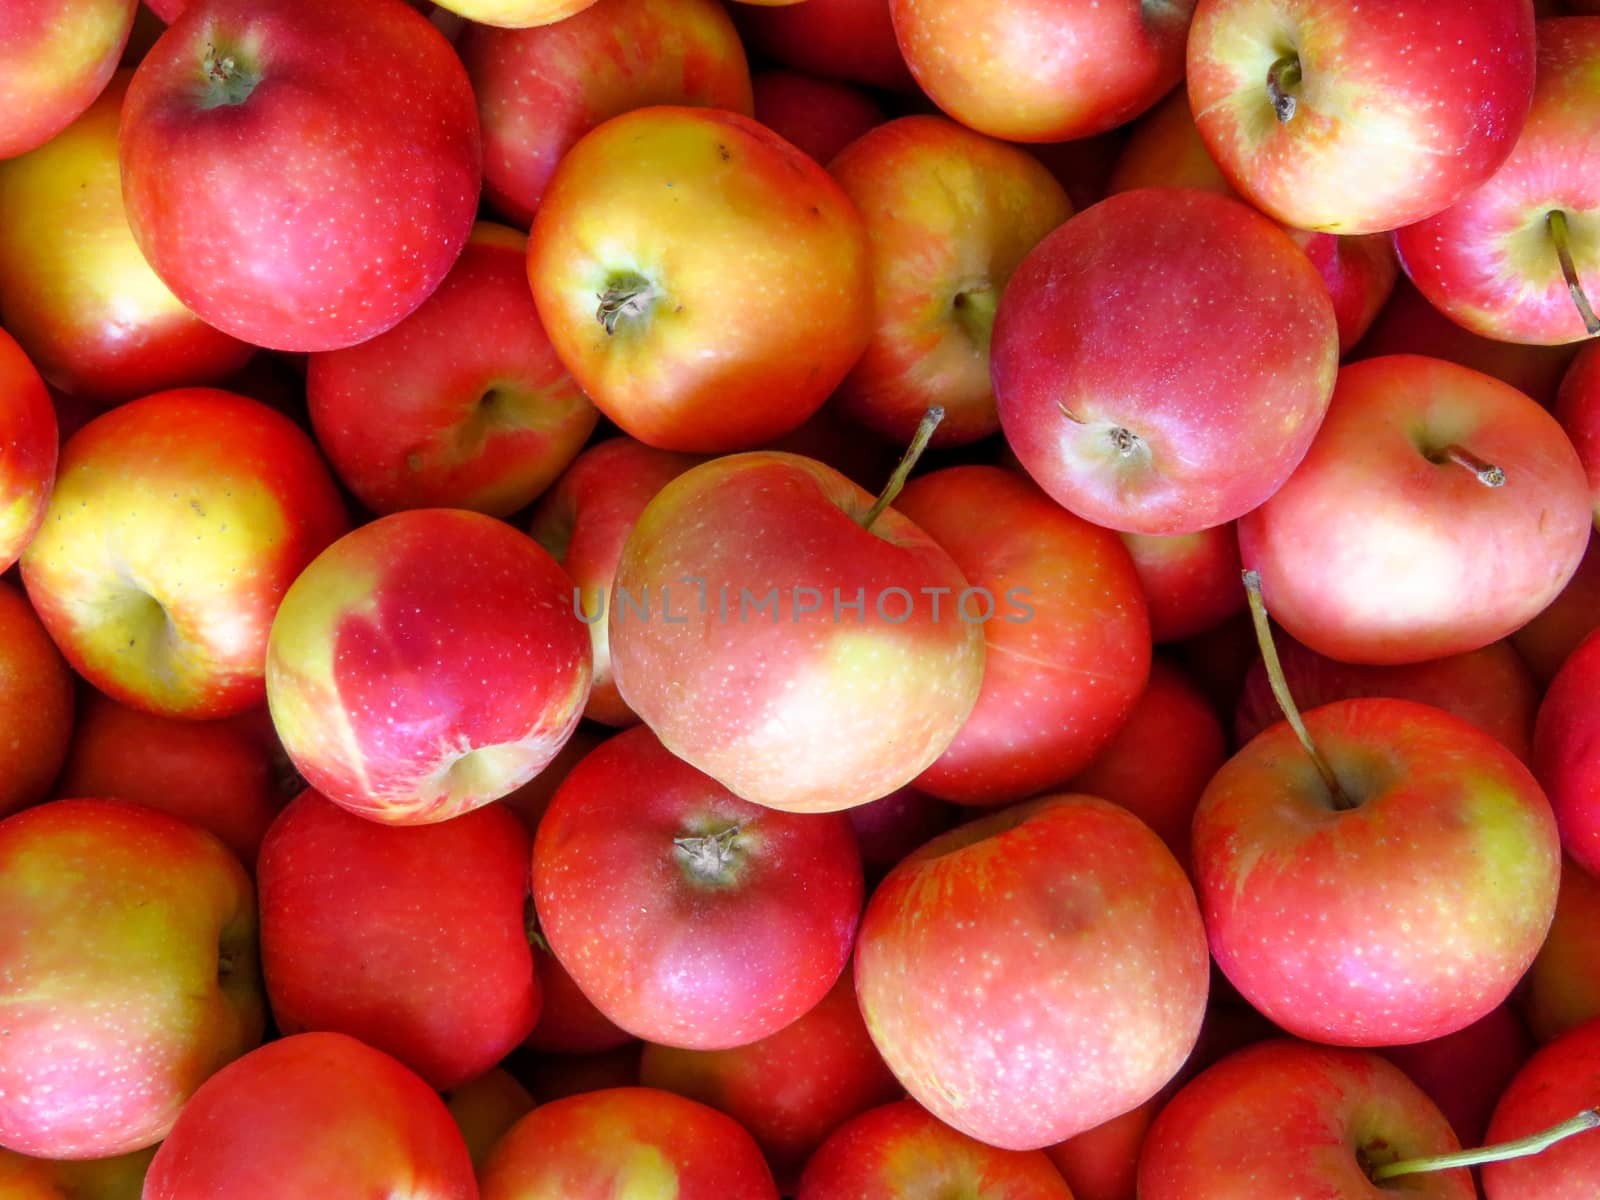 Red apples background by Venakr